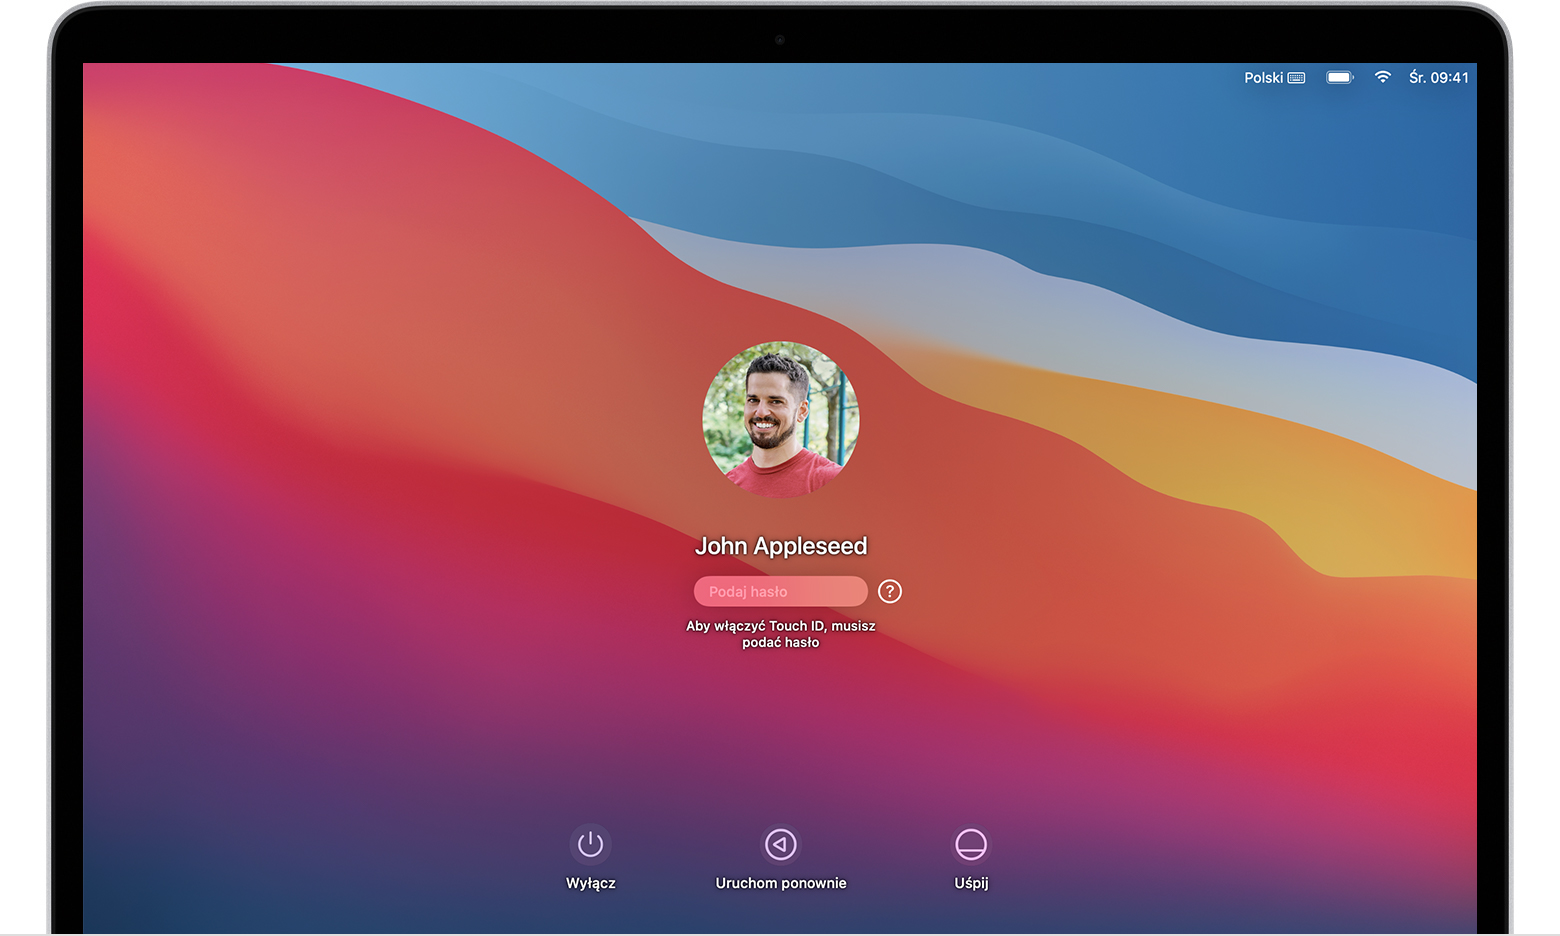 Ekran logowania użytkownika systemu macOS Big Sur